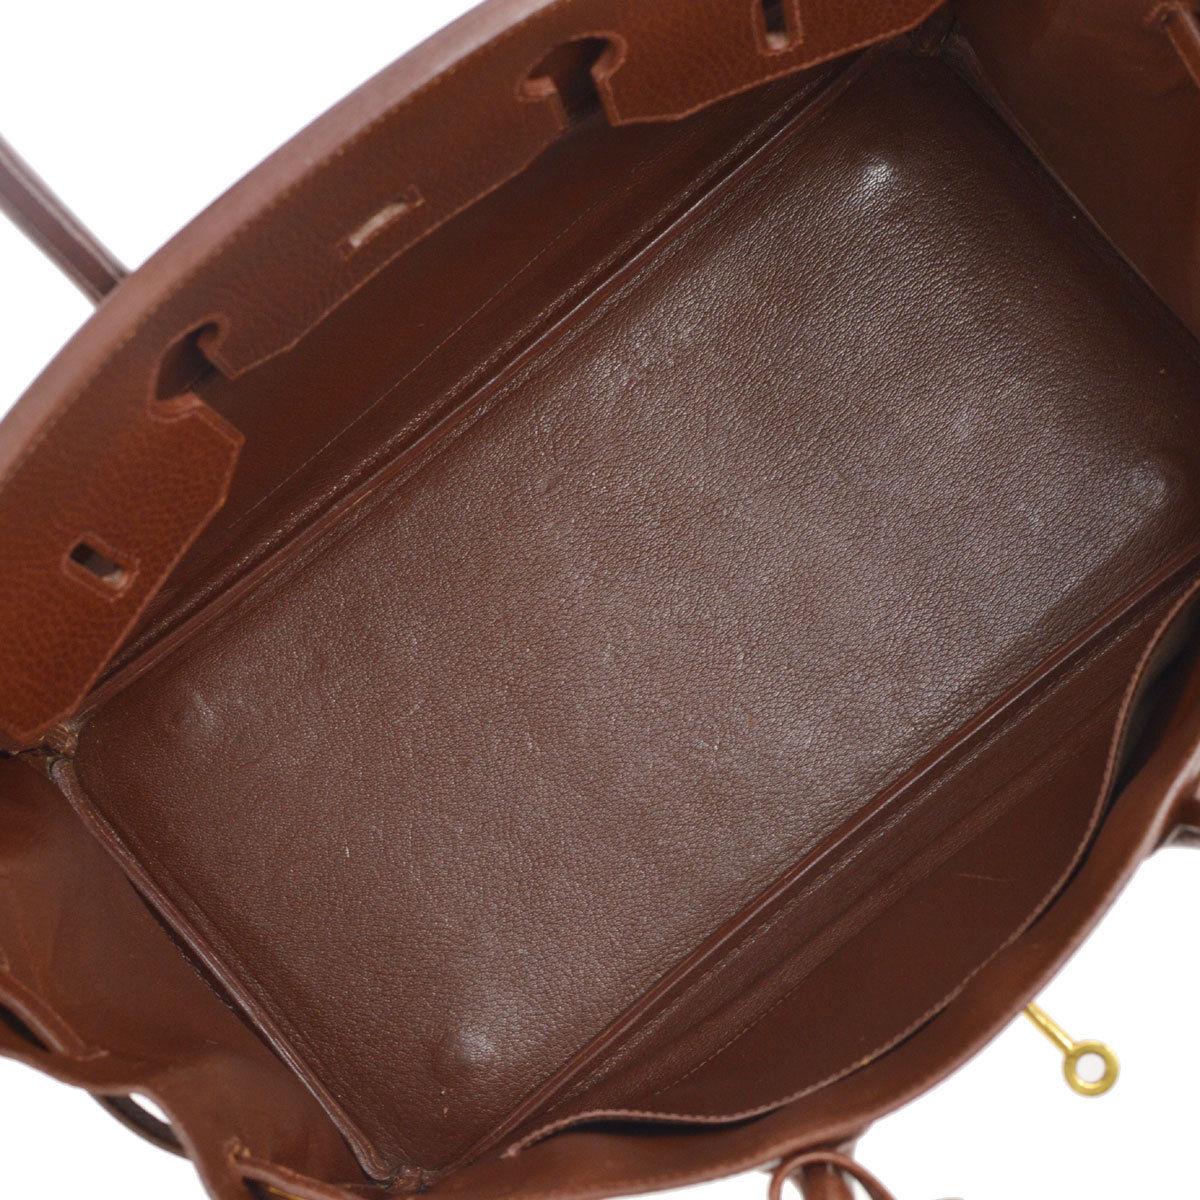 Hermes Birkin 35 Chocolate Leather Gold Travel Carryall Top Handle Satchel Tote 1